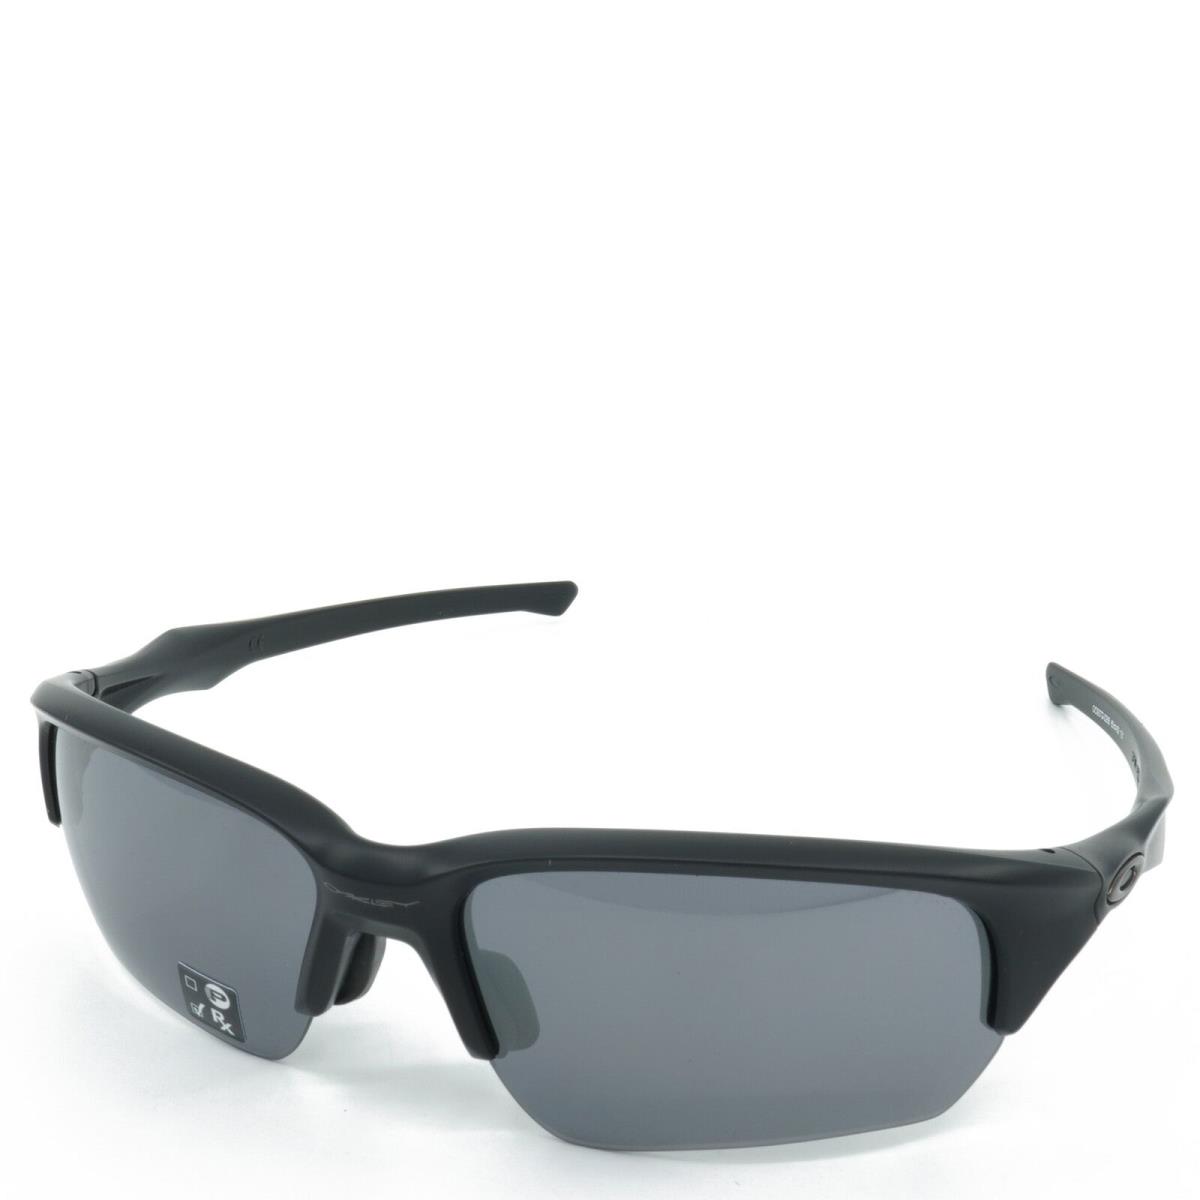 OO9372-02 Mens Oakley Flak Beta A Sunglasses - Matte Black/black Iridium - Frame: Beige